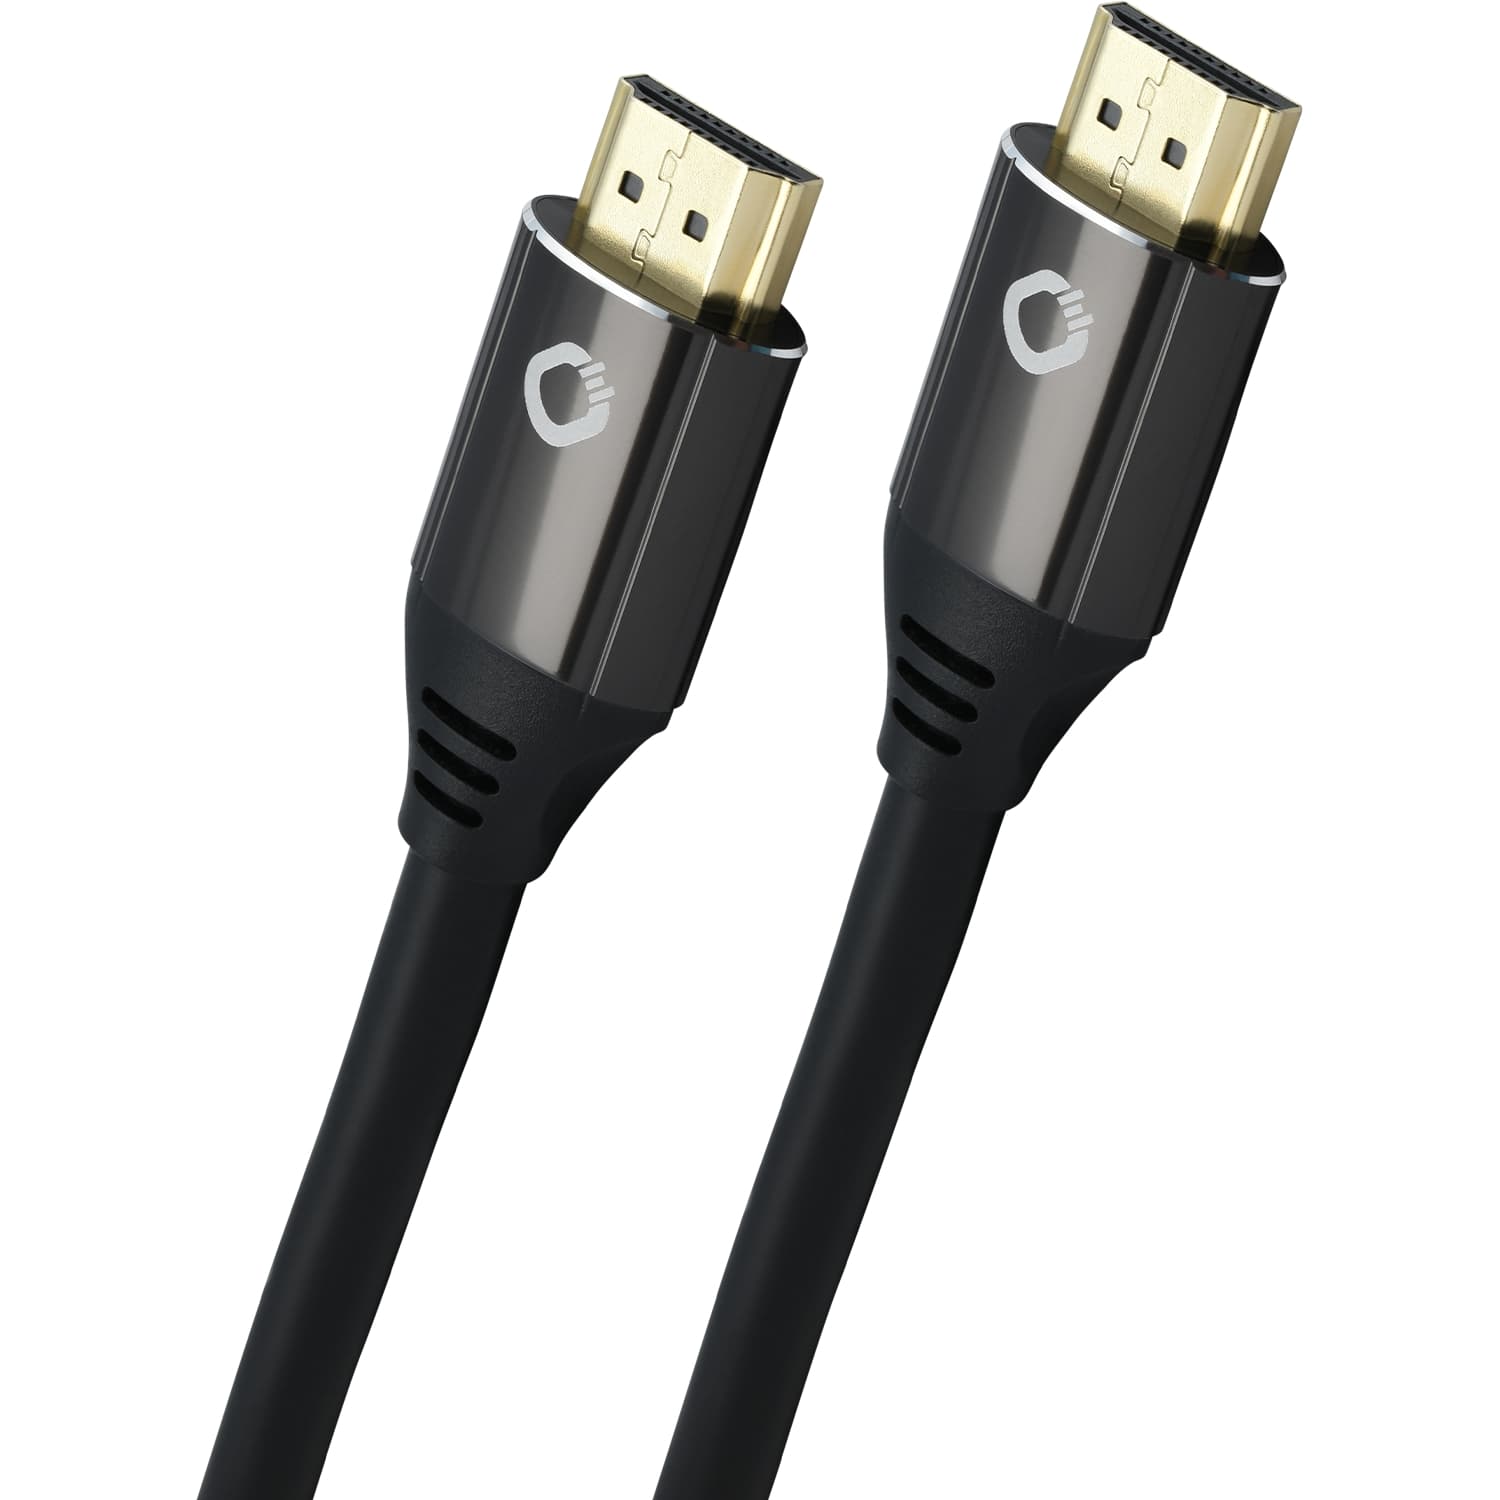 HDMI кабели Oehlbach PERFORMANCE Black Magic MKII, UHS HDMI, 5,0m black, D1C92496 микрофонные предусилители и микшеры warm audio wa12 mkii black